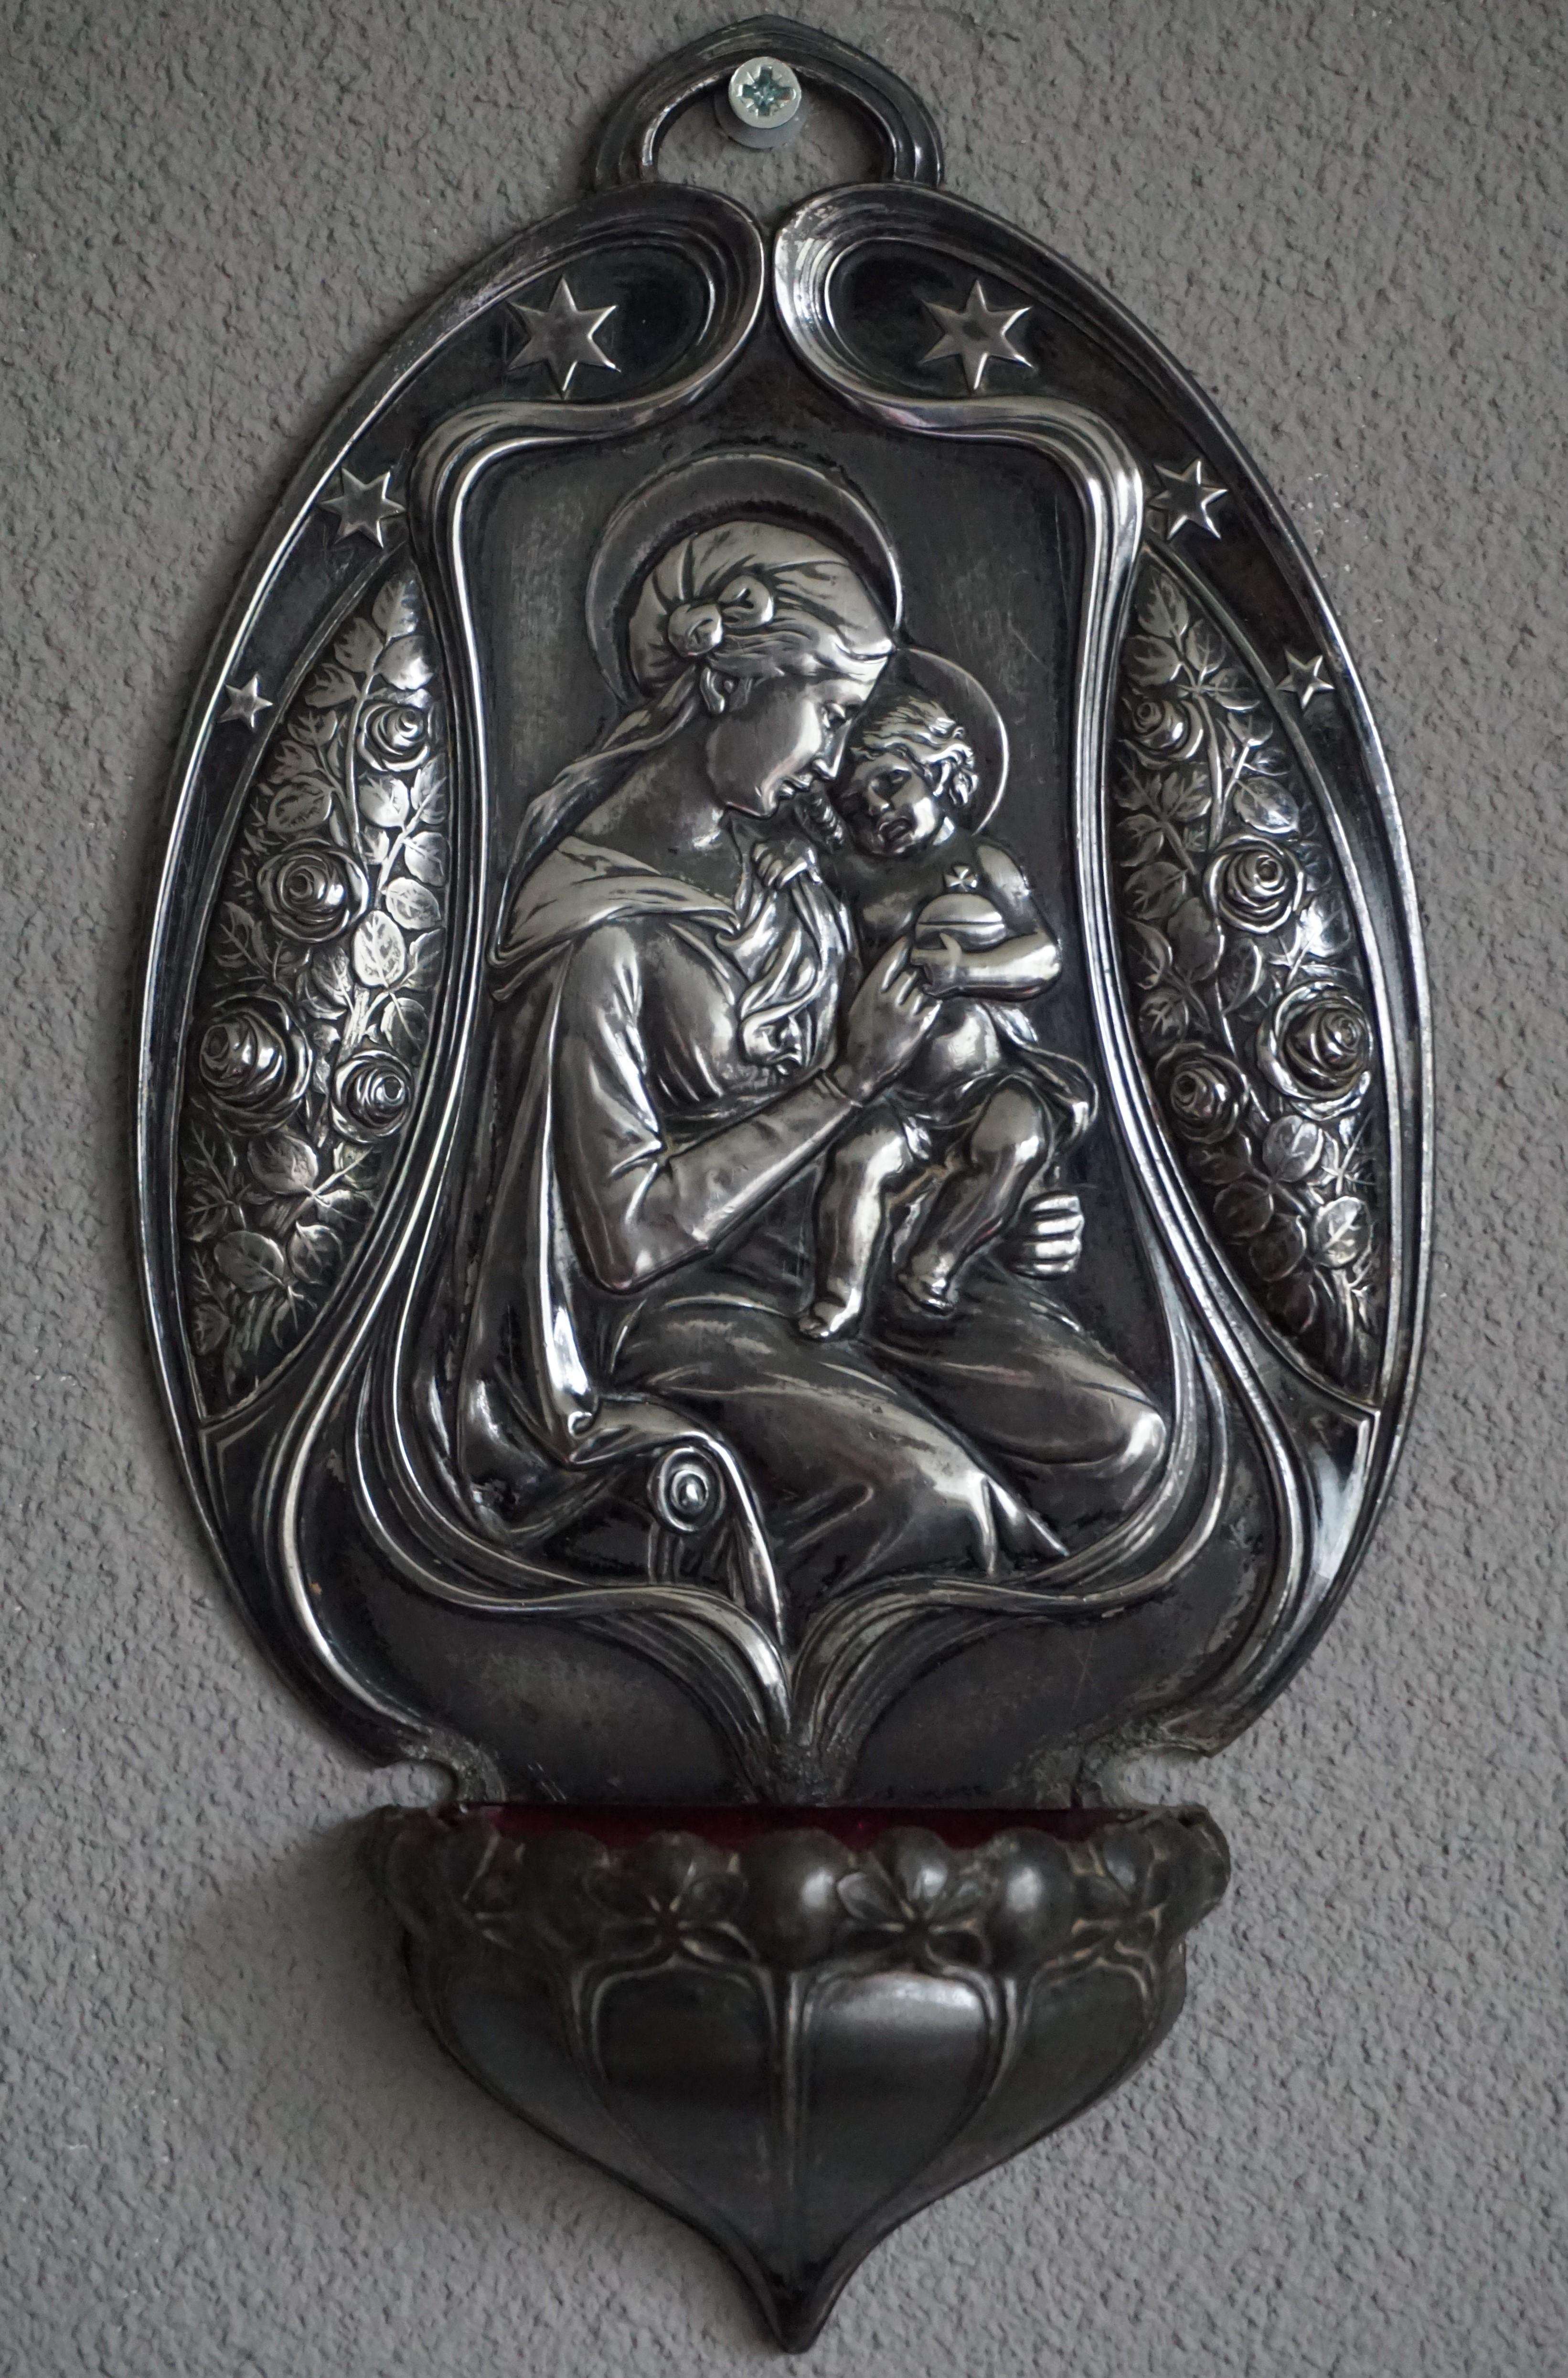 Jugendstil WMF Marked and Silvered Holy Water Font Depicting Mary & Child Jesus For Sale 7